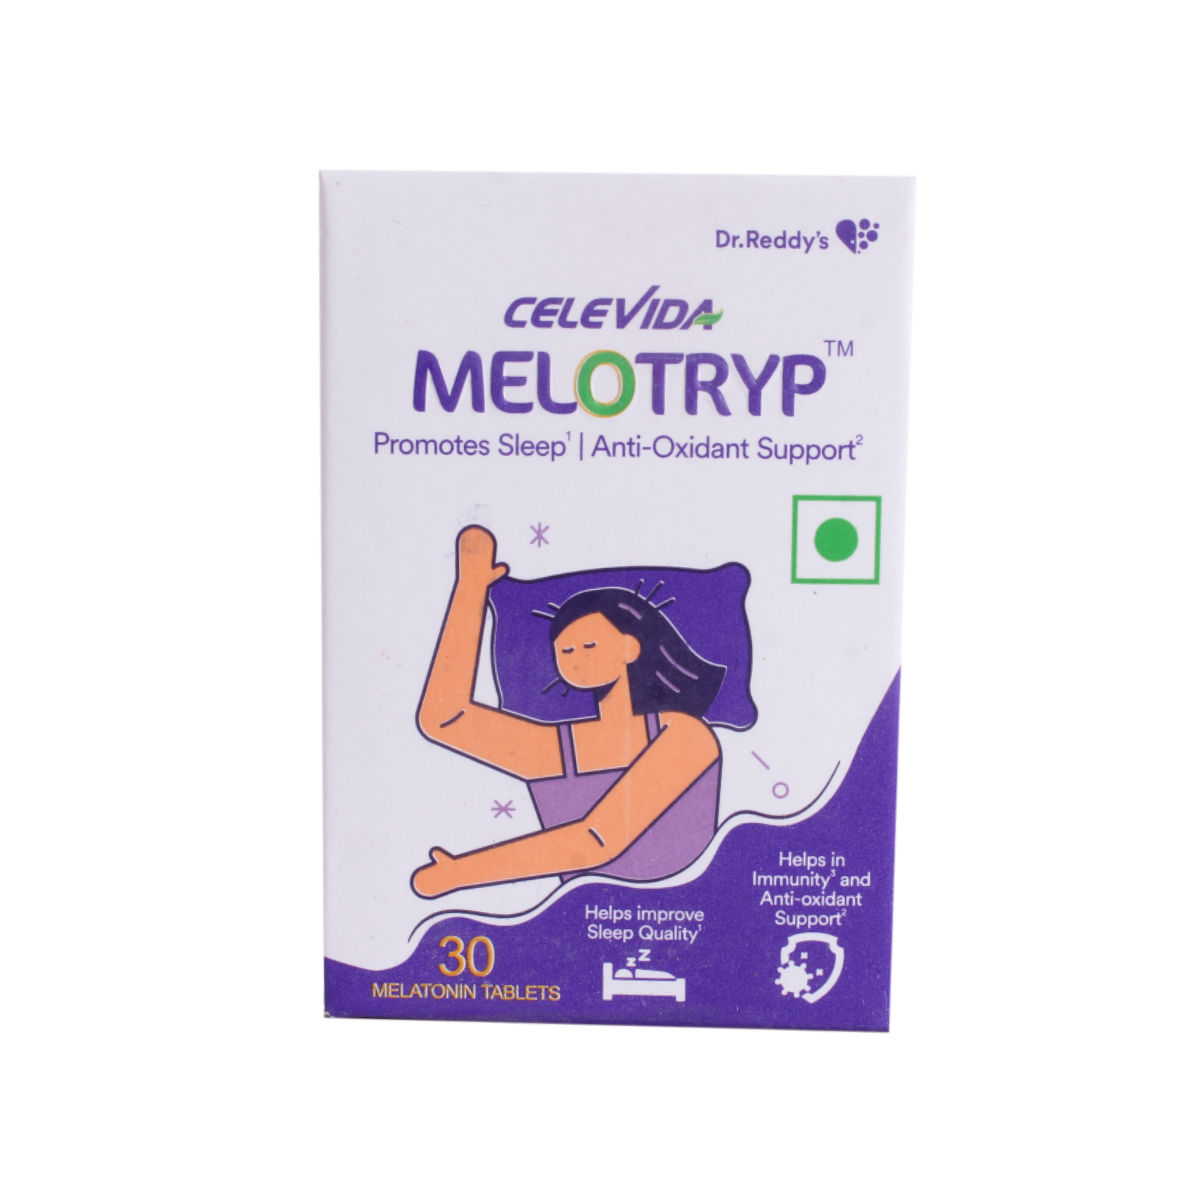 Buy Celevida Melotryp Tablet 30's Online